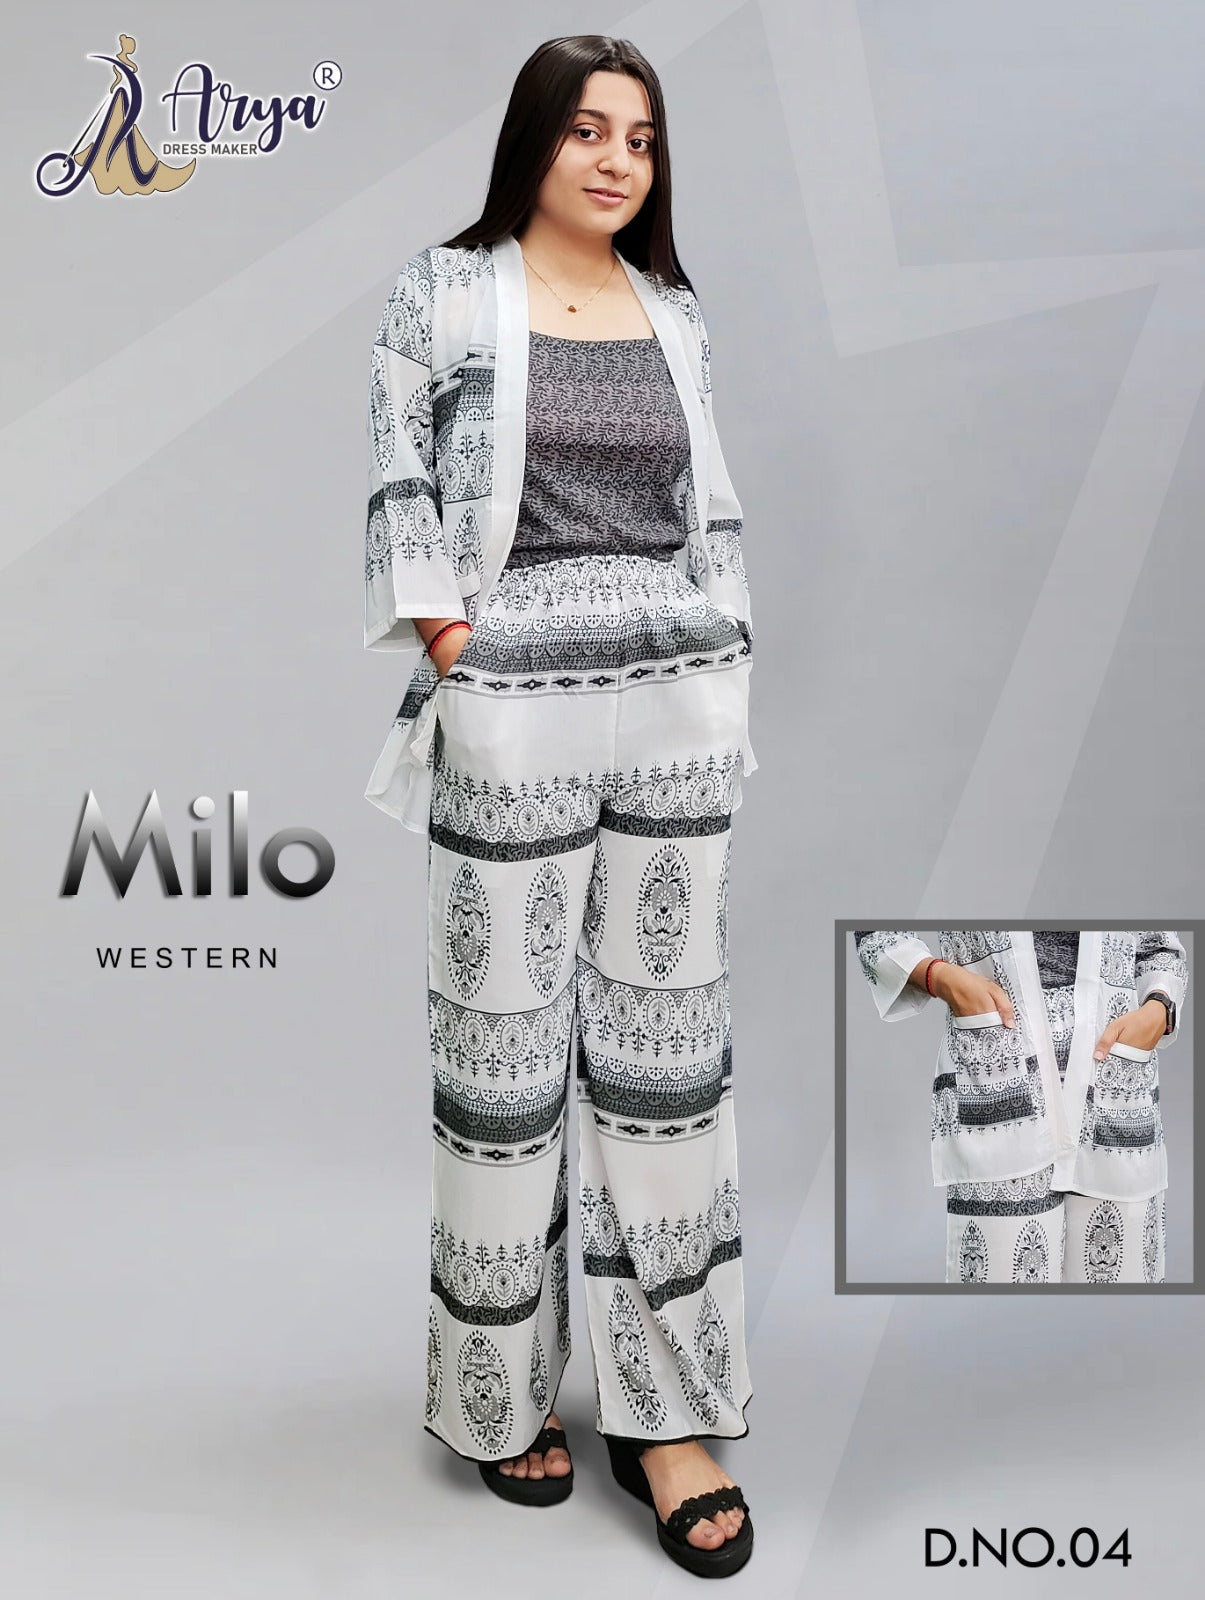 MILO WESTERN Super Trendy Collection